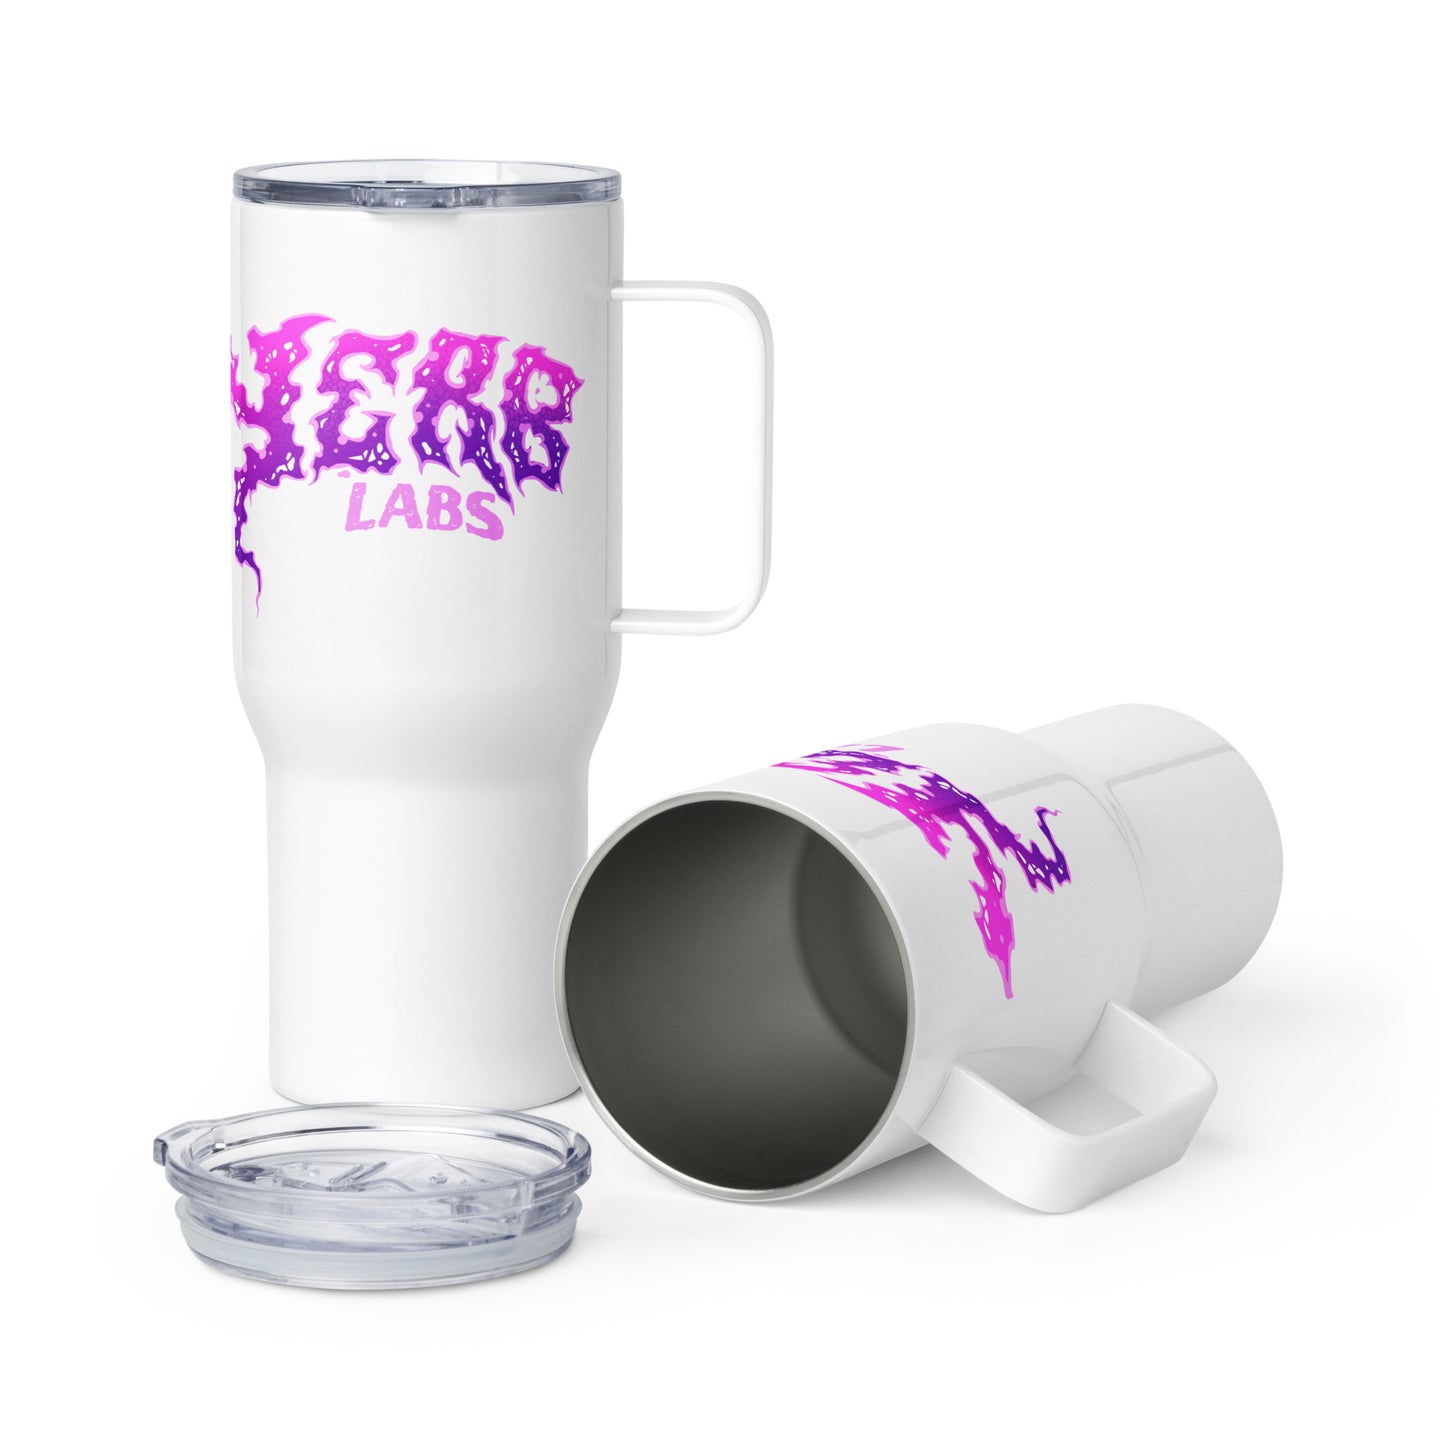 Yerb Labs Travel mug with a handle